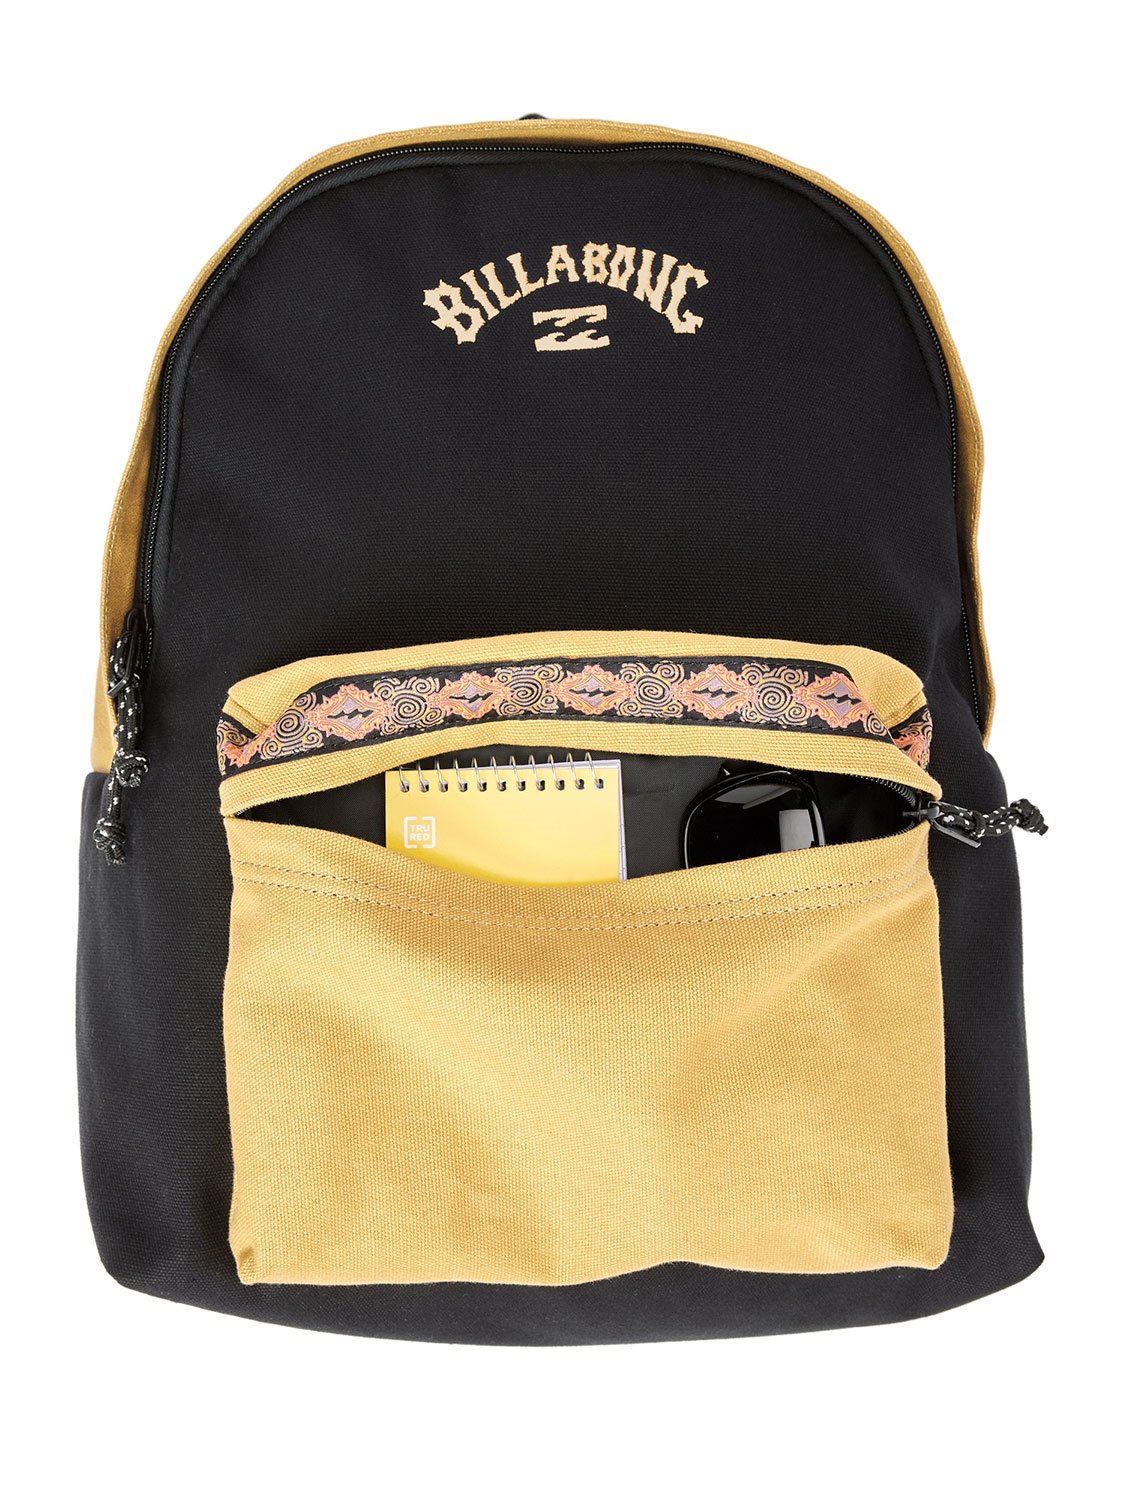 Billabong Men's All Day Colour Block 24L Backpack